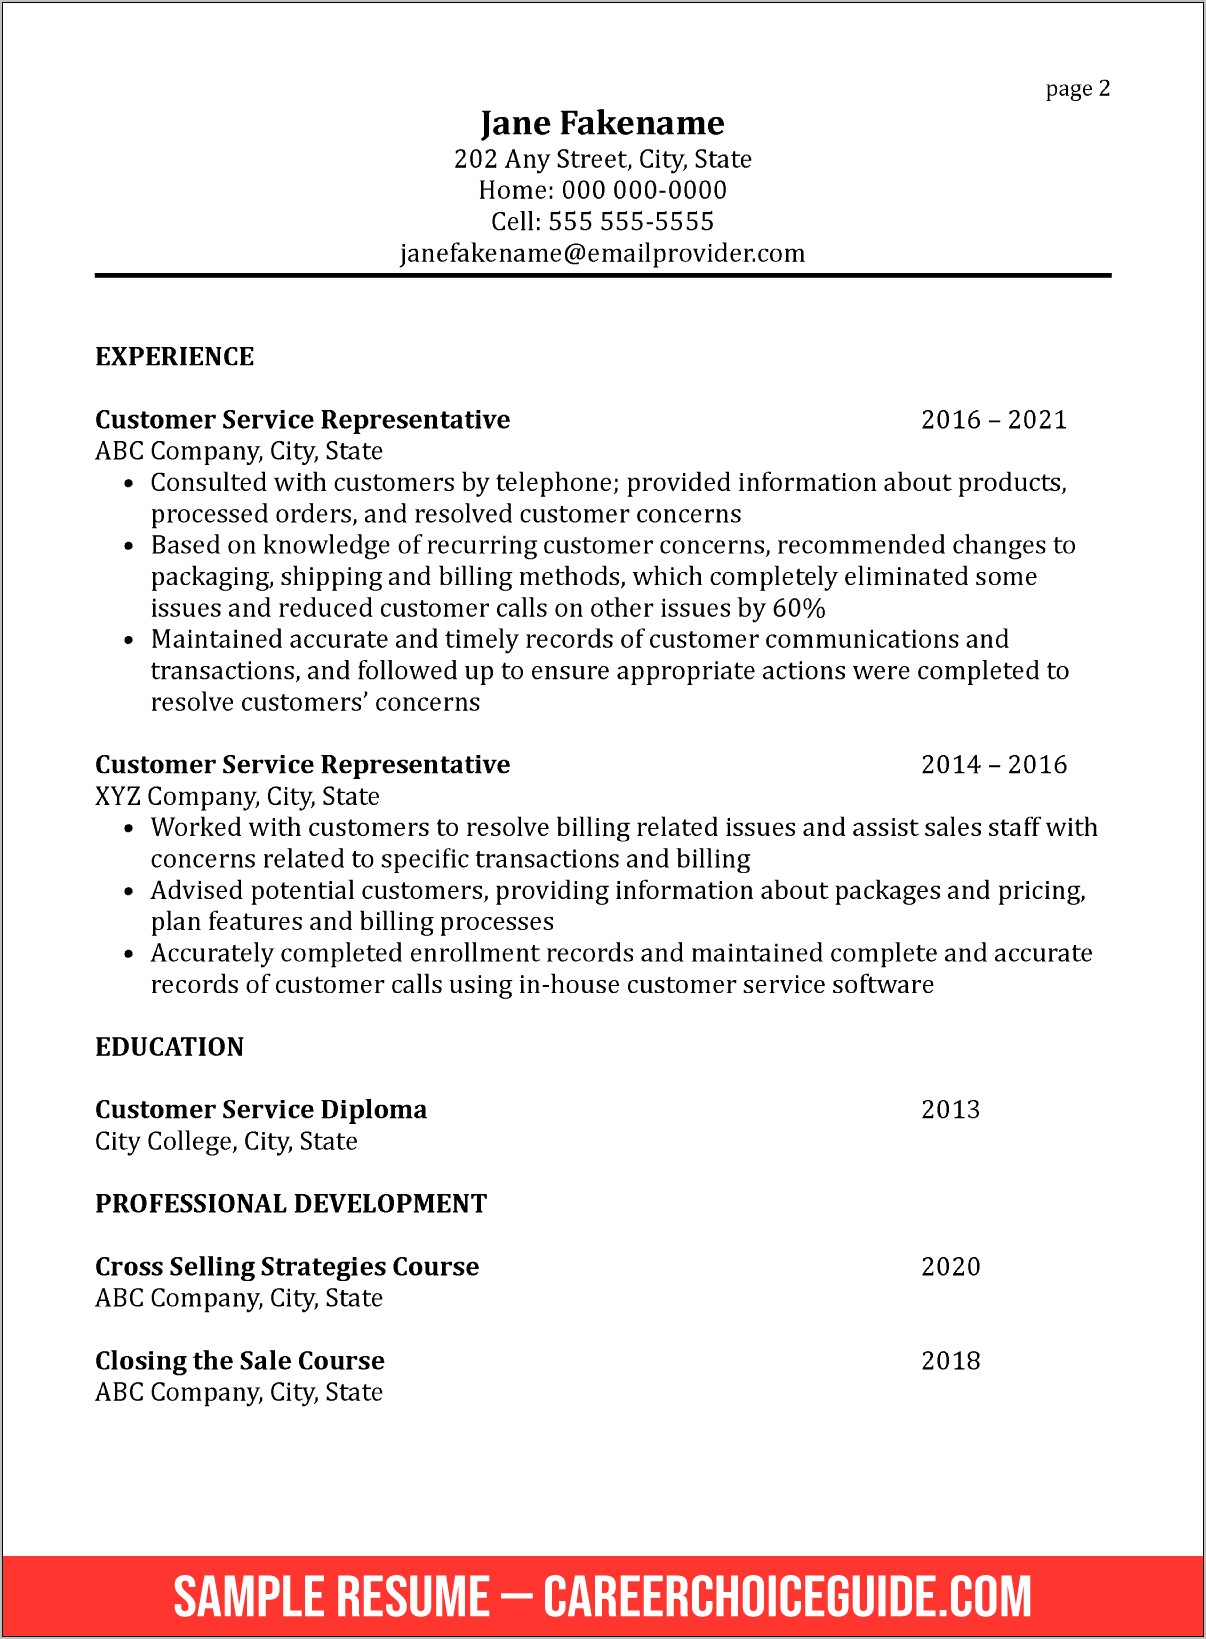 Detailed Resume Skills For Call Center Rep